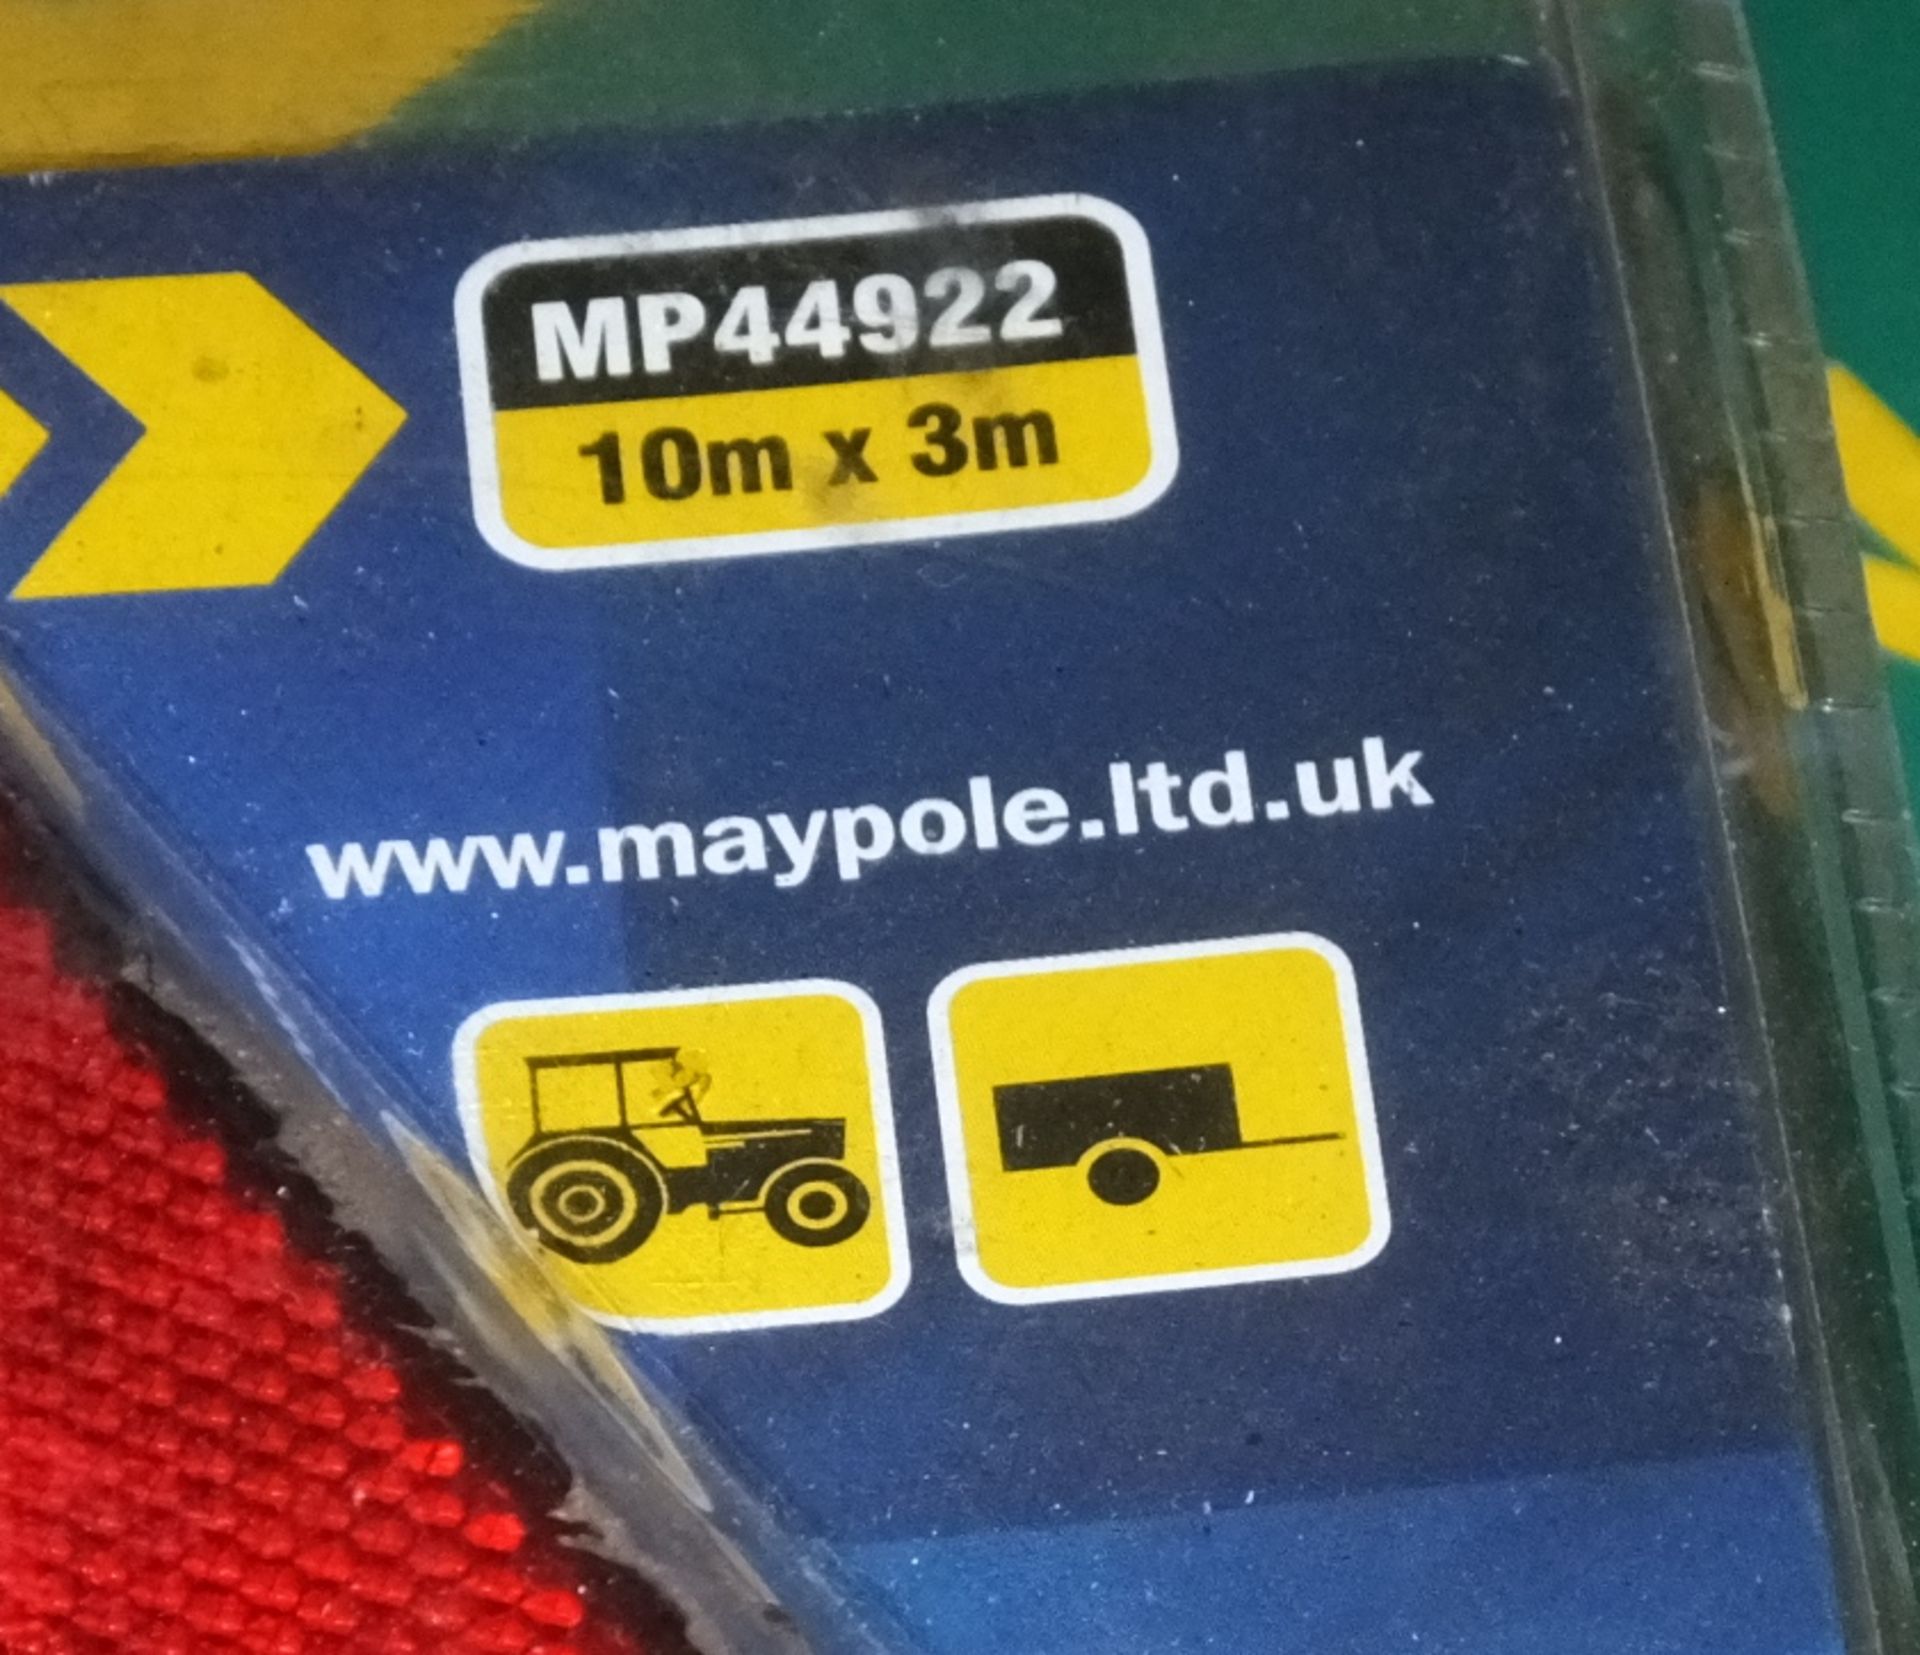 Maypole Magentic 12V lighting pods - MP44922 - 10M x 3M - Image 3 of 3